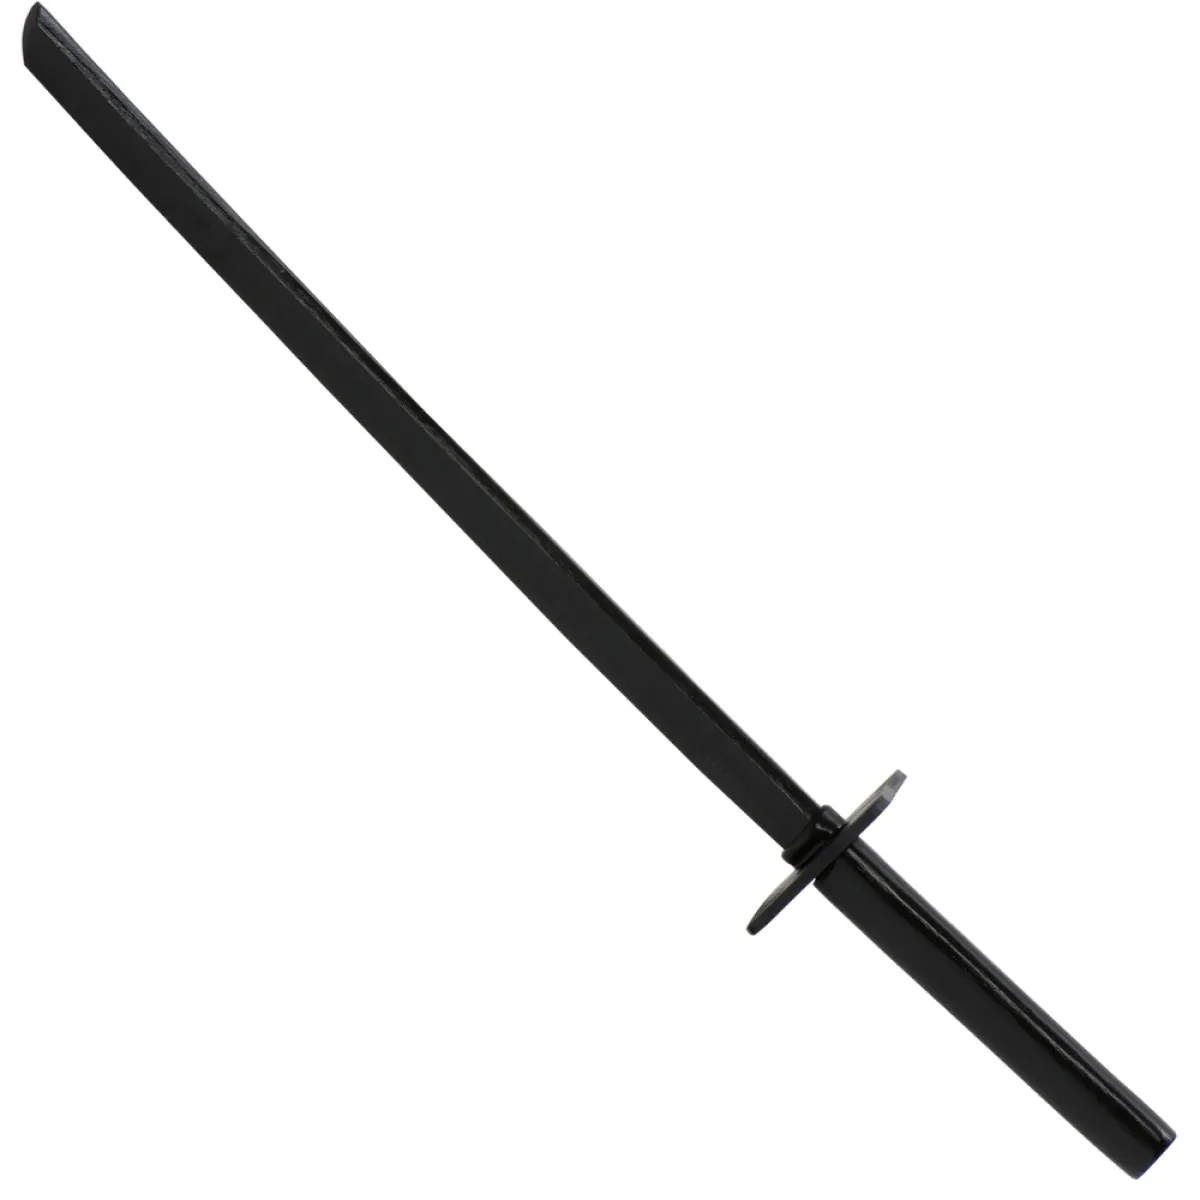 Espada ninja de madera